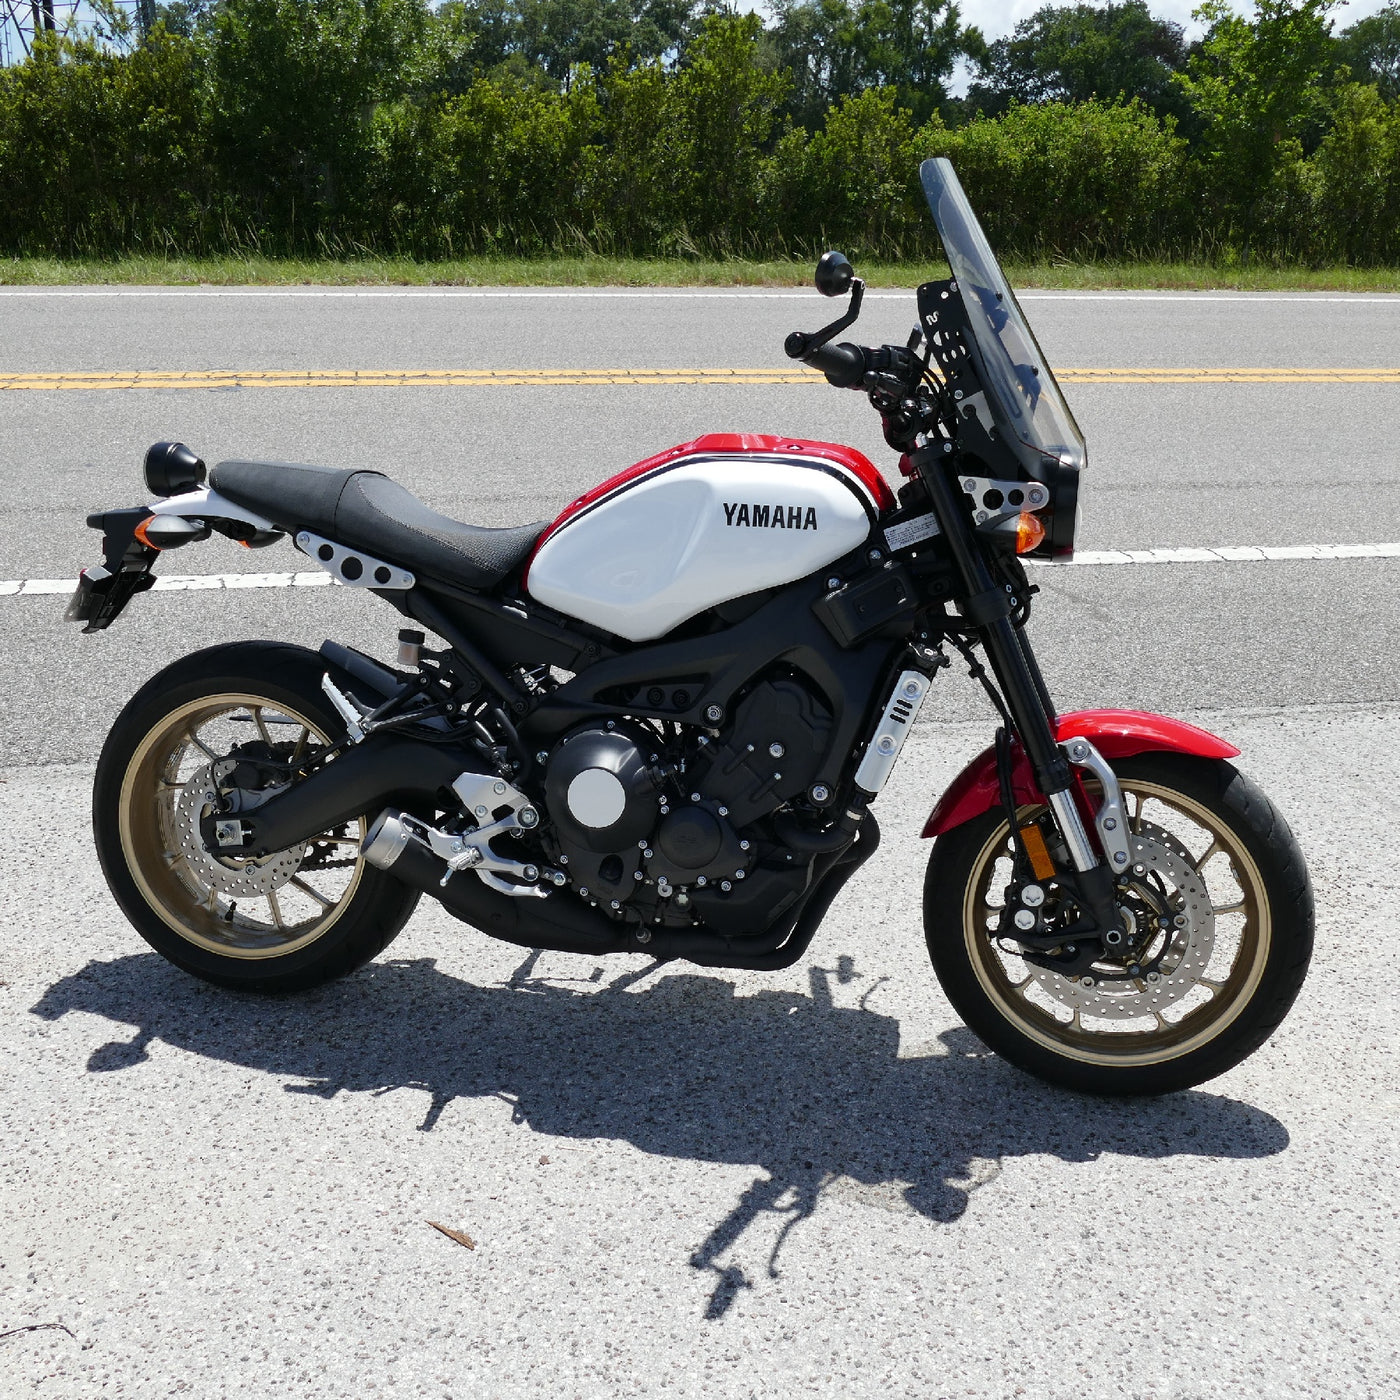 20 inch light gray Madstad Motorcycle Adjustable Windshield System Yamaha XSR900